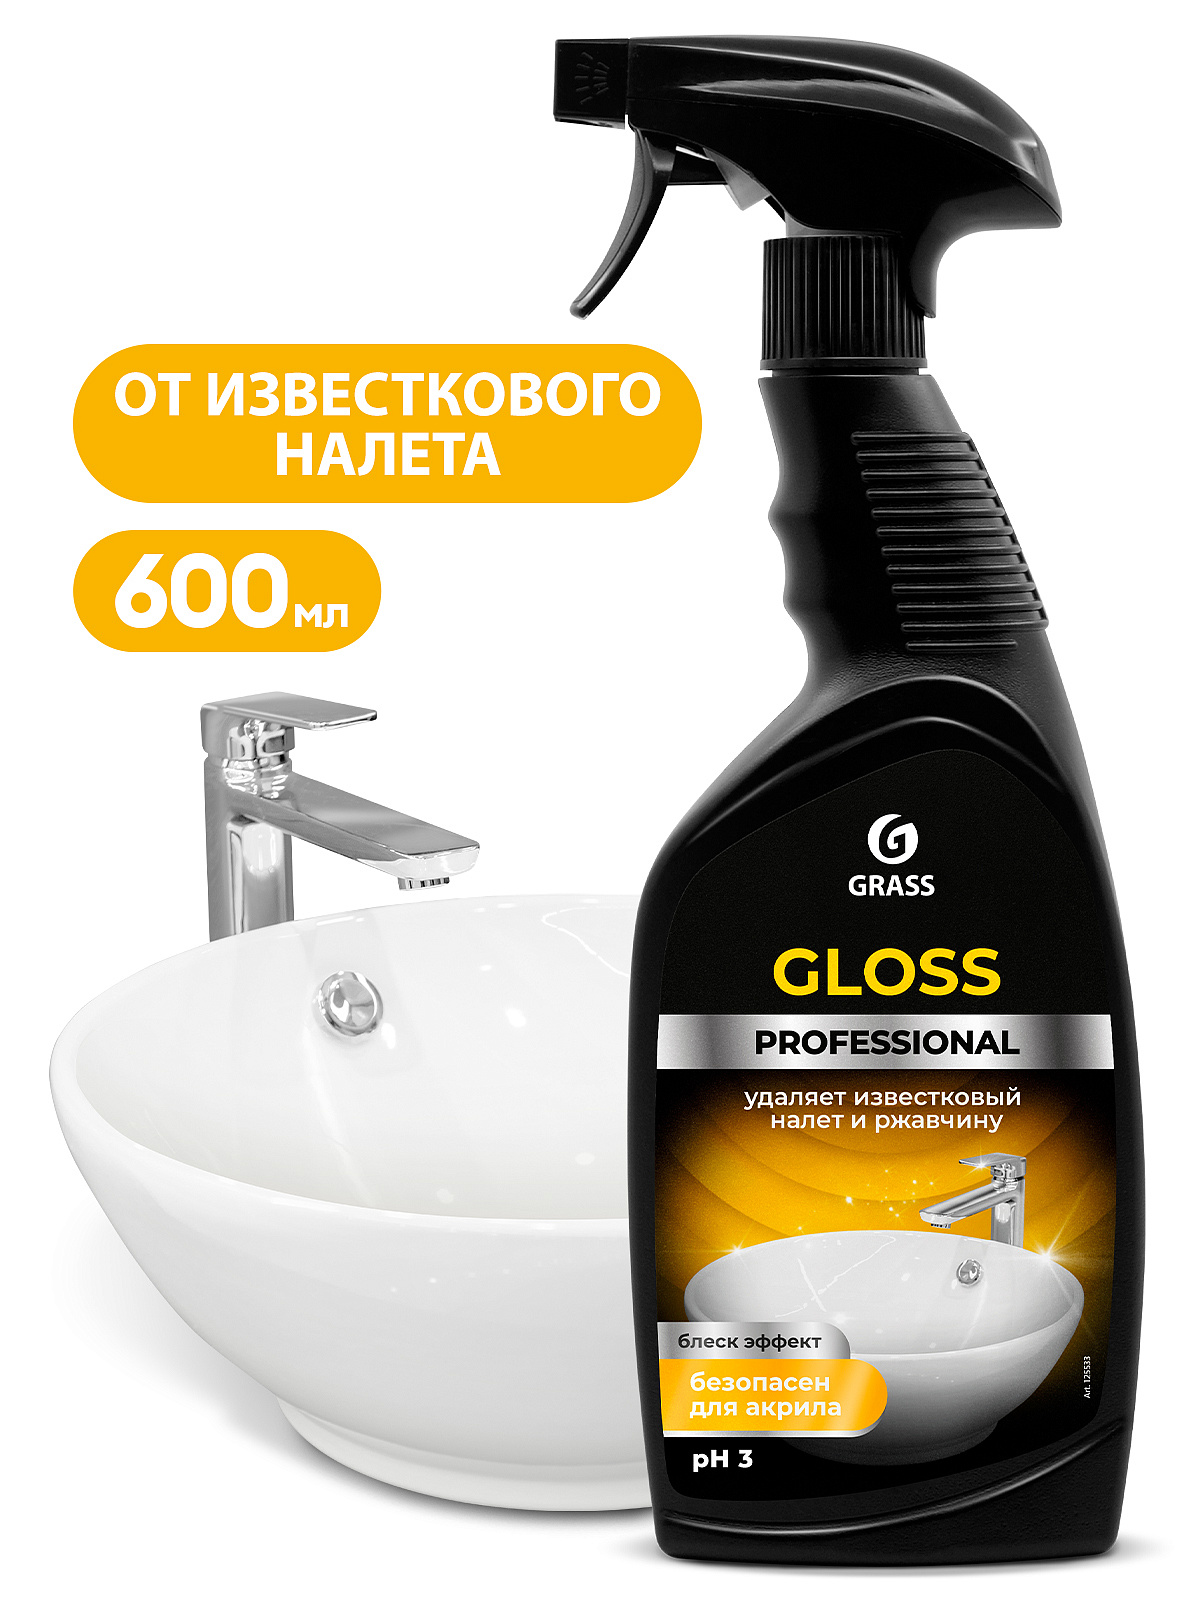 Grass Gloss Professional Чистящее средство для сан.узлов и ванных комнат l(флакон 600 мл. )